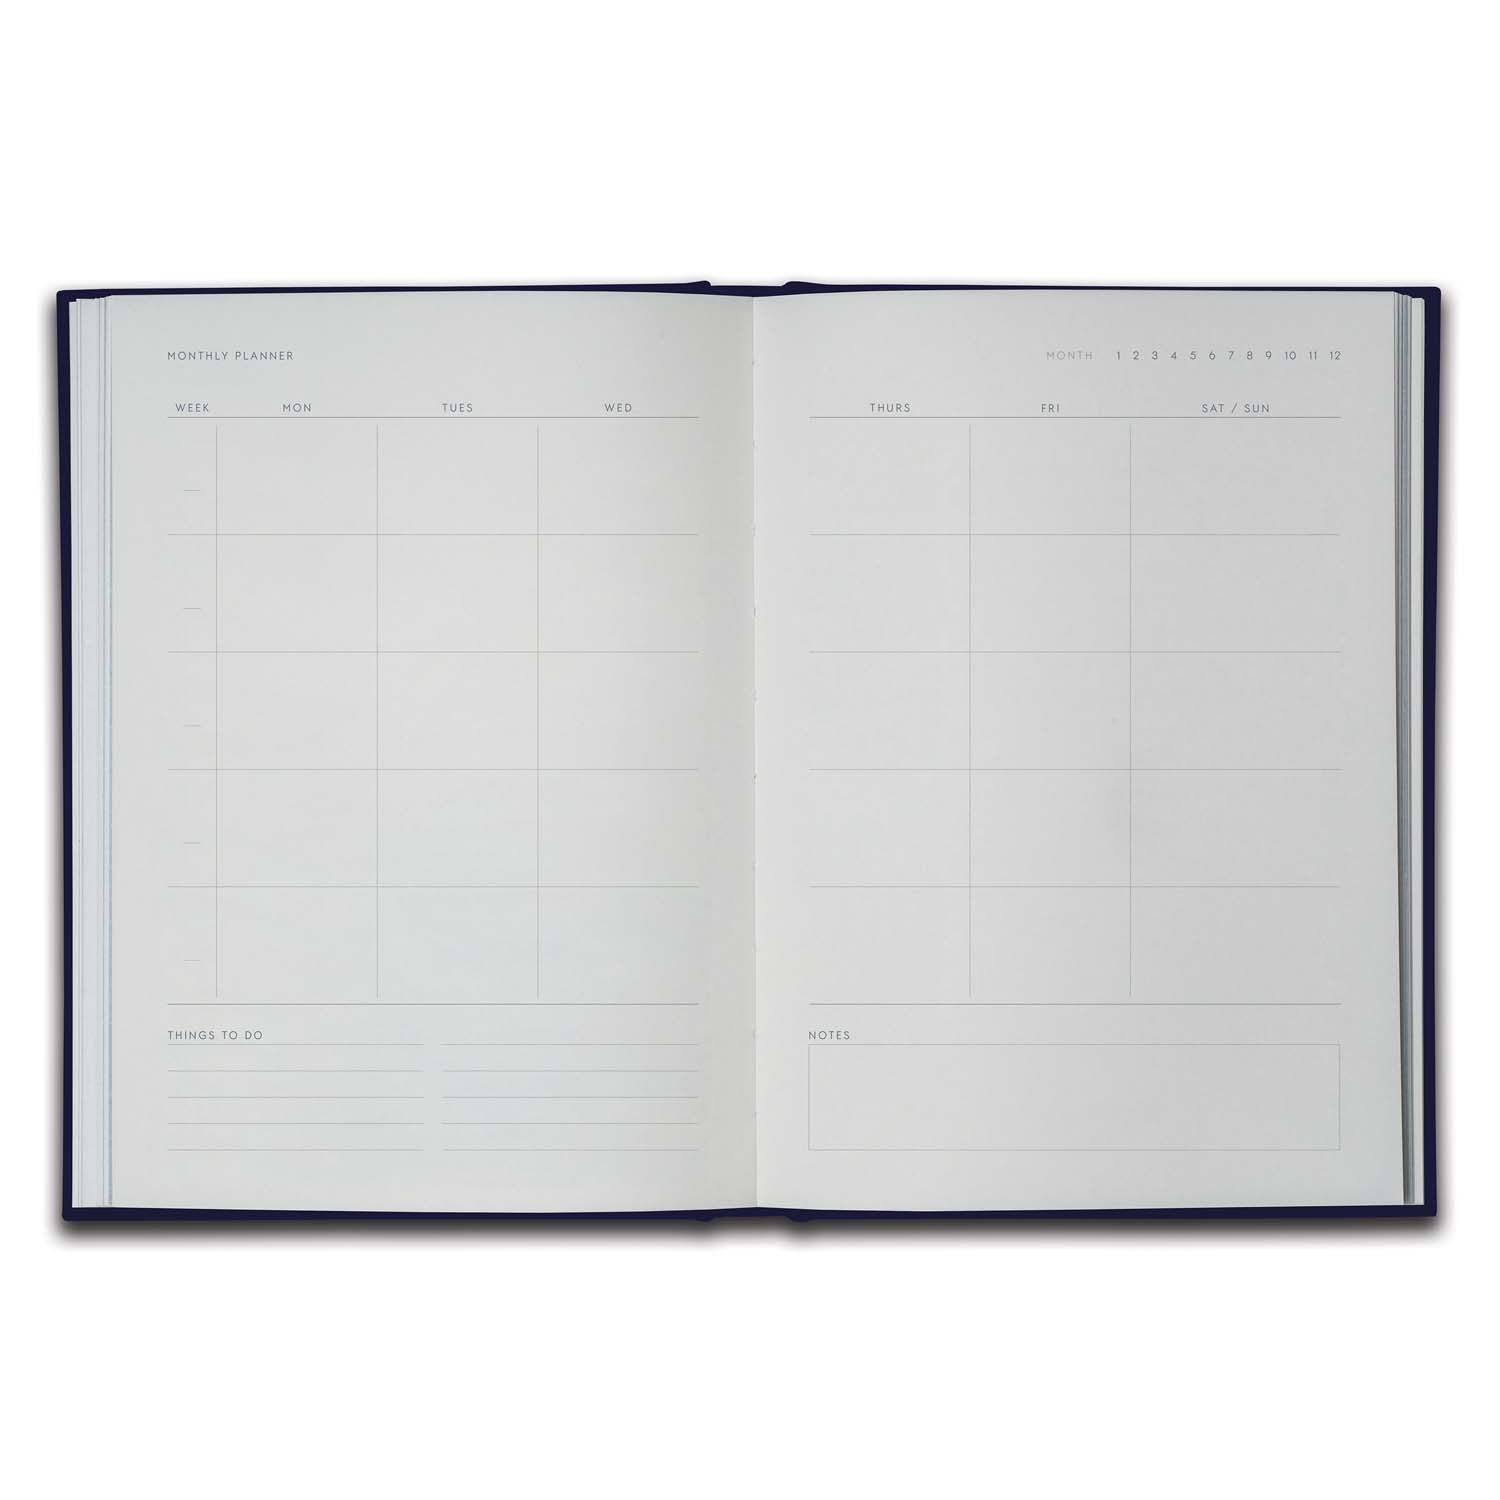 Hartover Notebook Yearly Planner KartotekCopenhagen PN-0003 / Inside 2